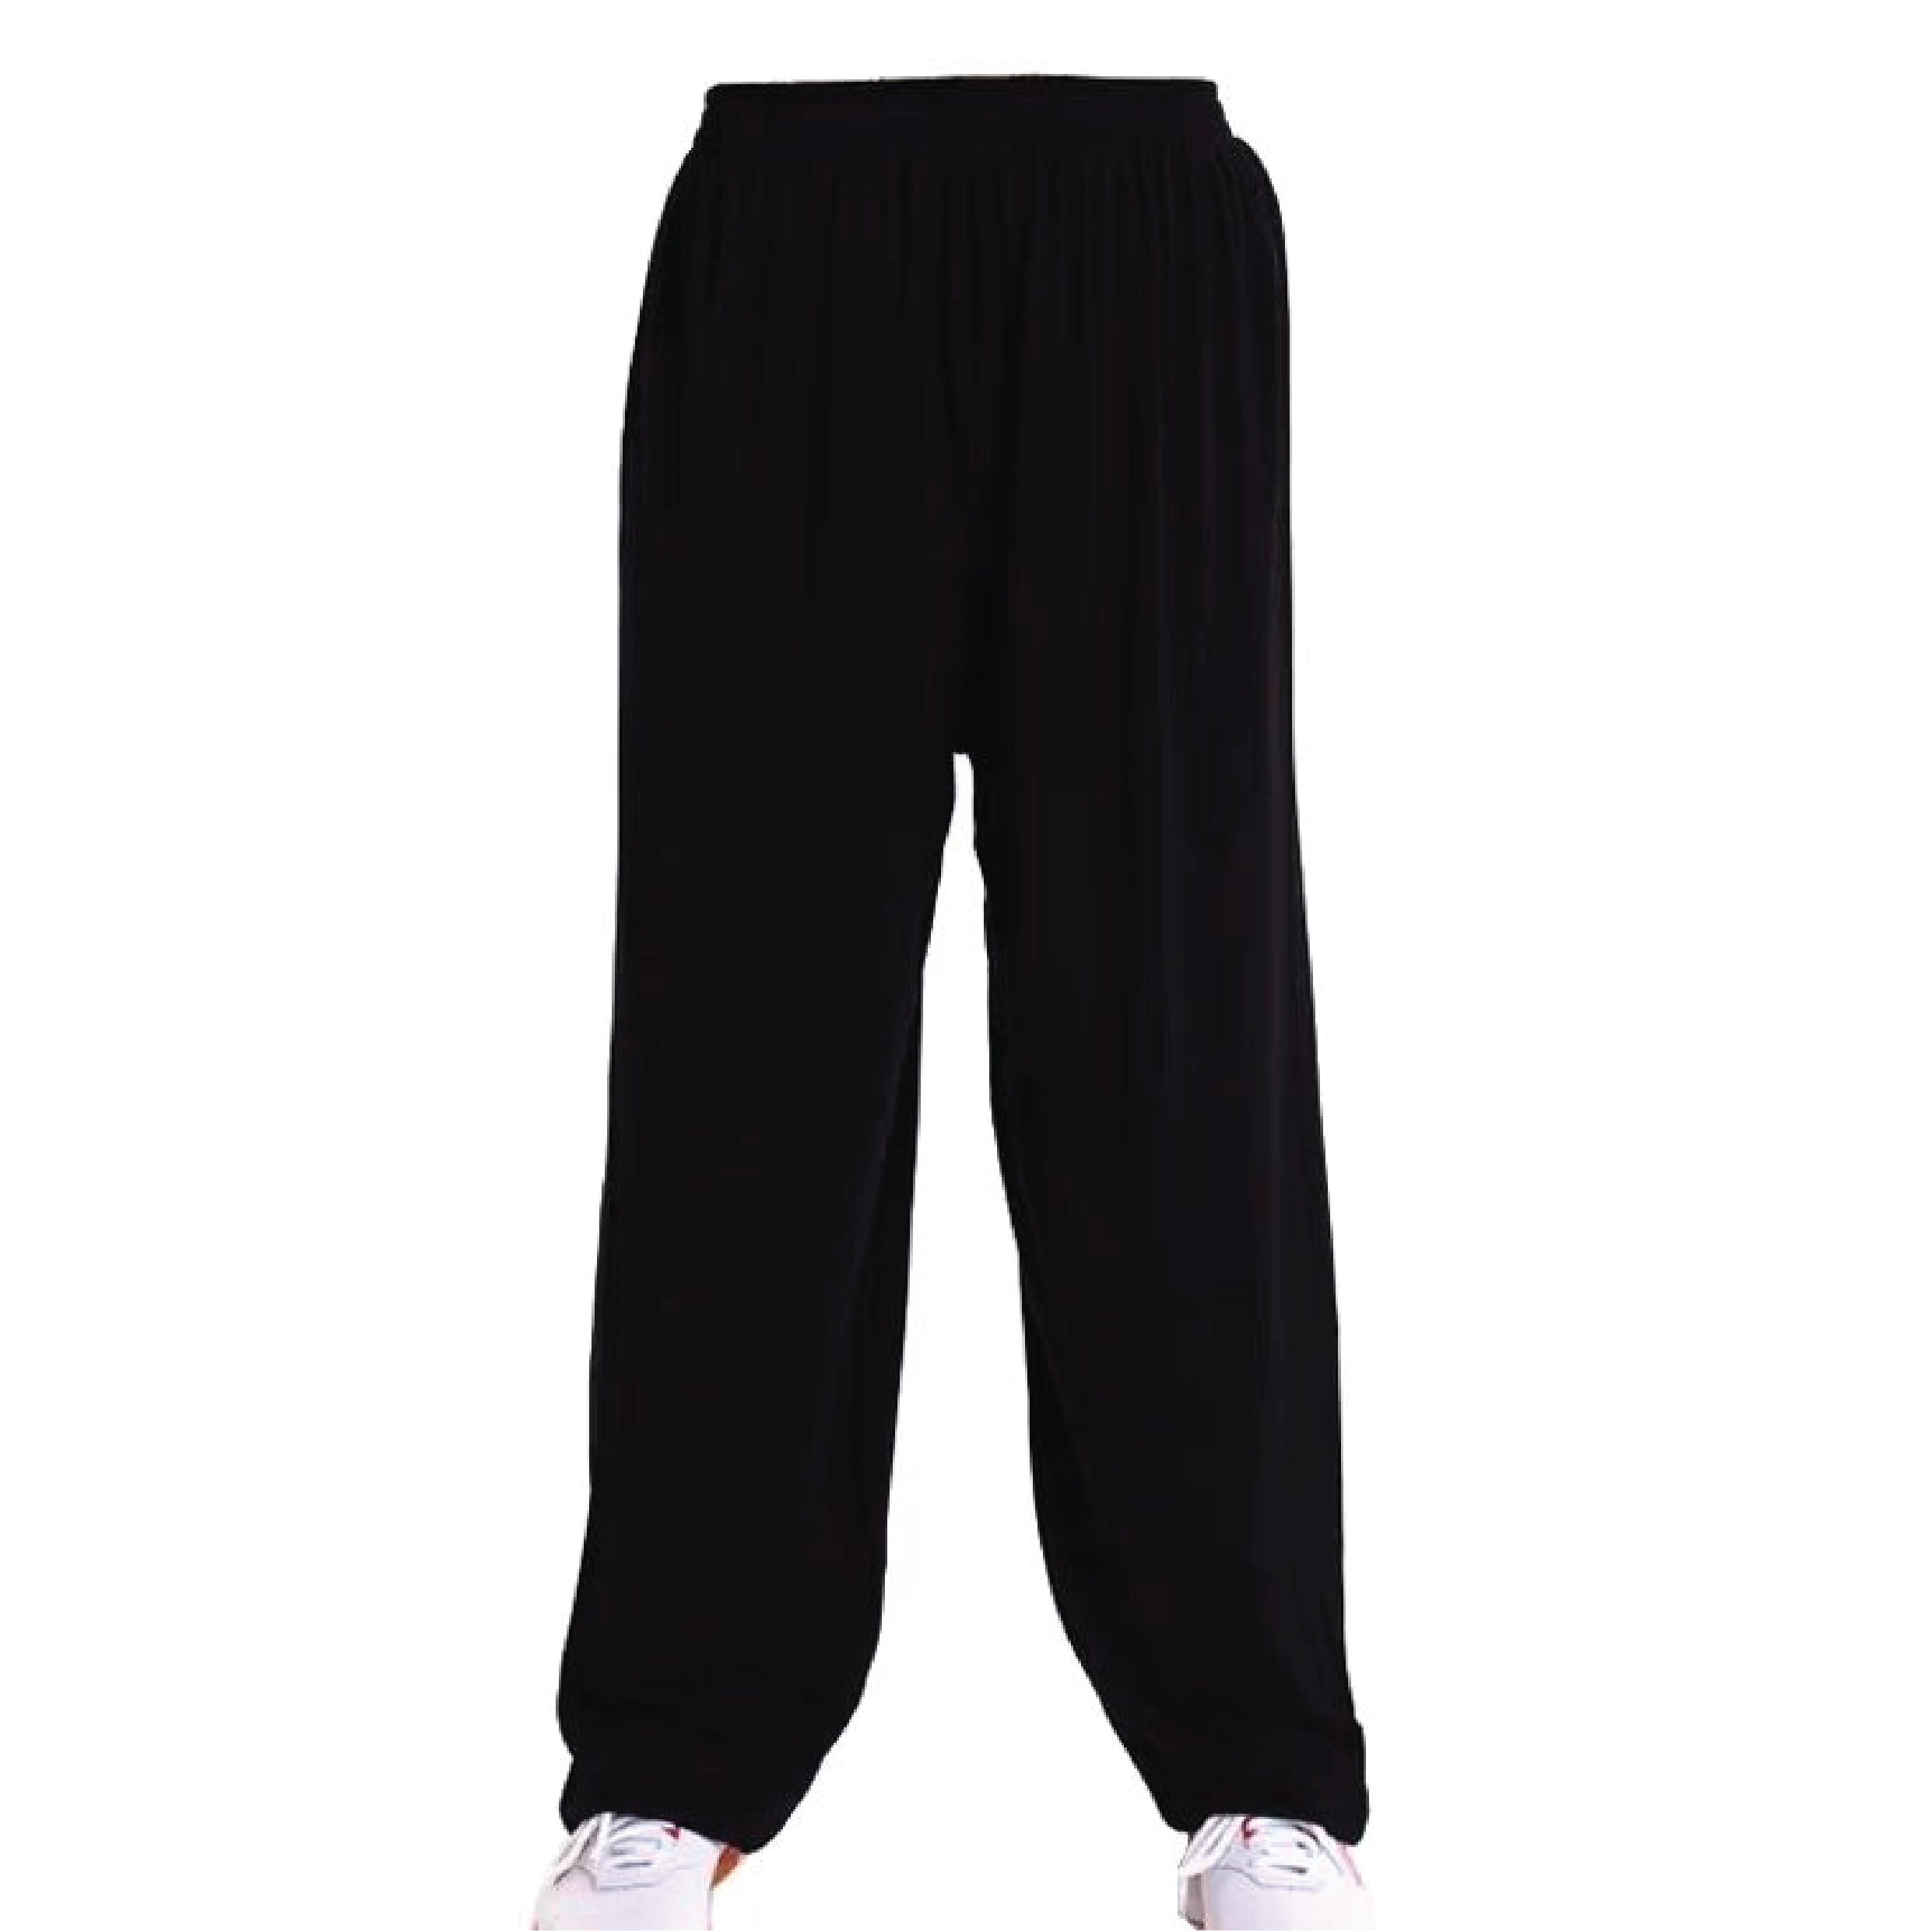 Cotton cloth Tai chi Martial arts Trousers Wingchun Kung Fu Training Pants  Black | eBay